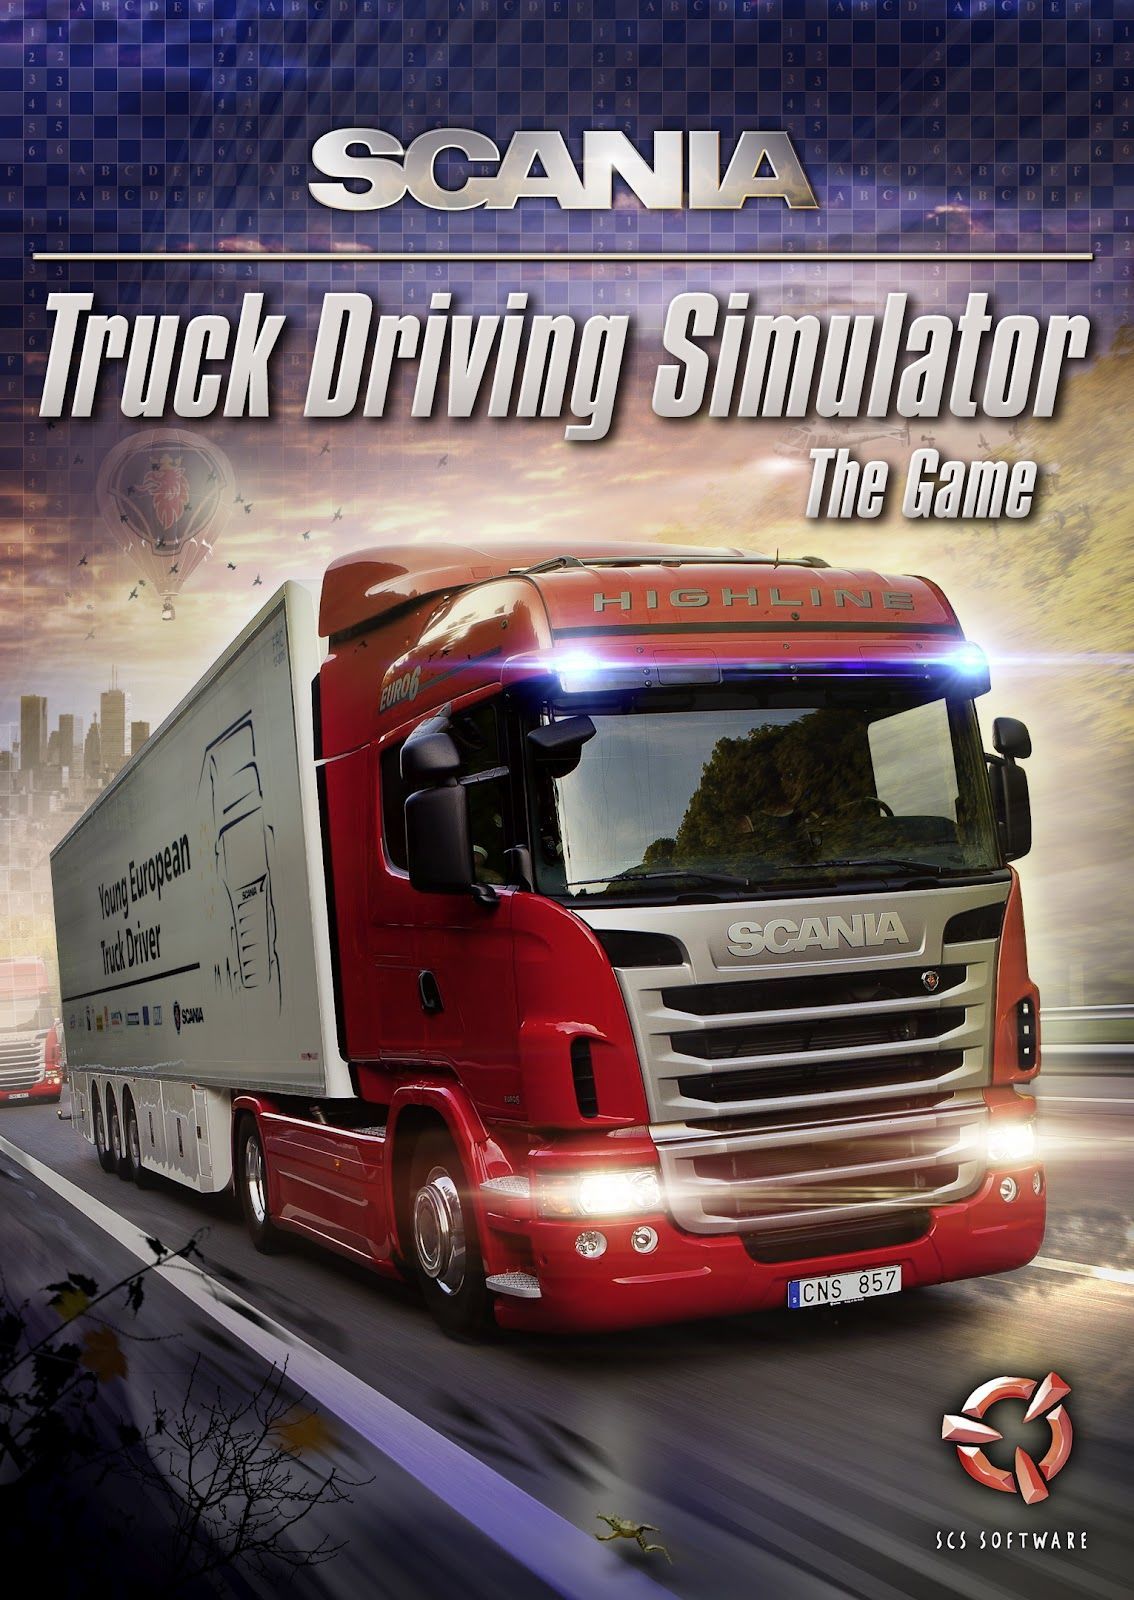 instal the last version for apple Bus Simulator Car Driving